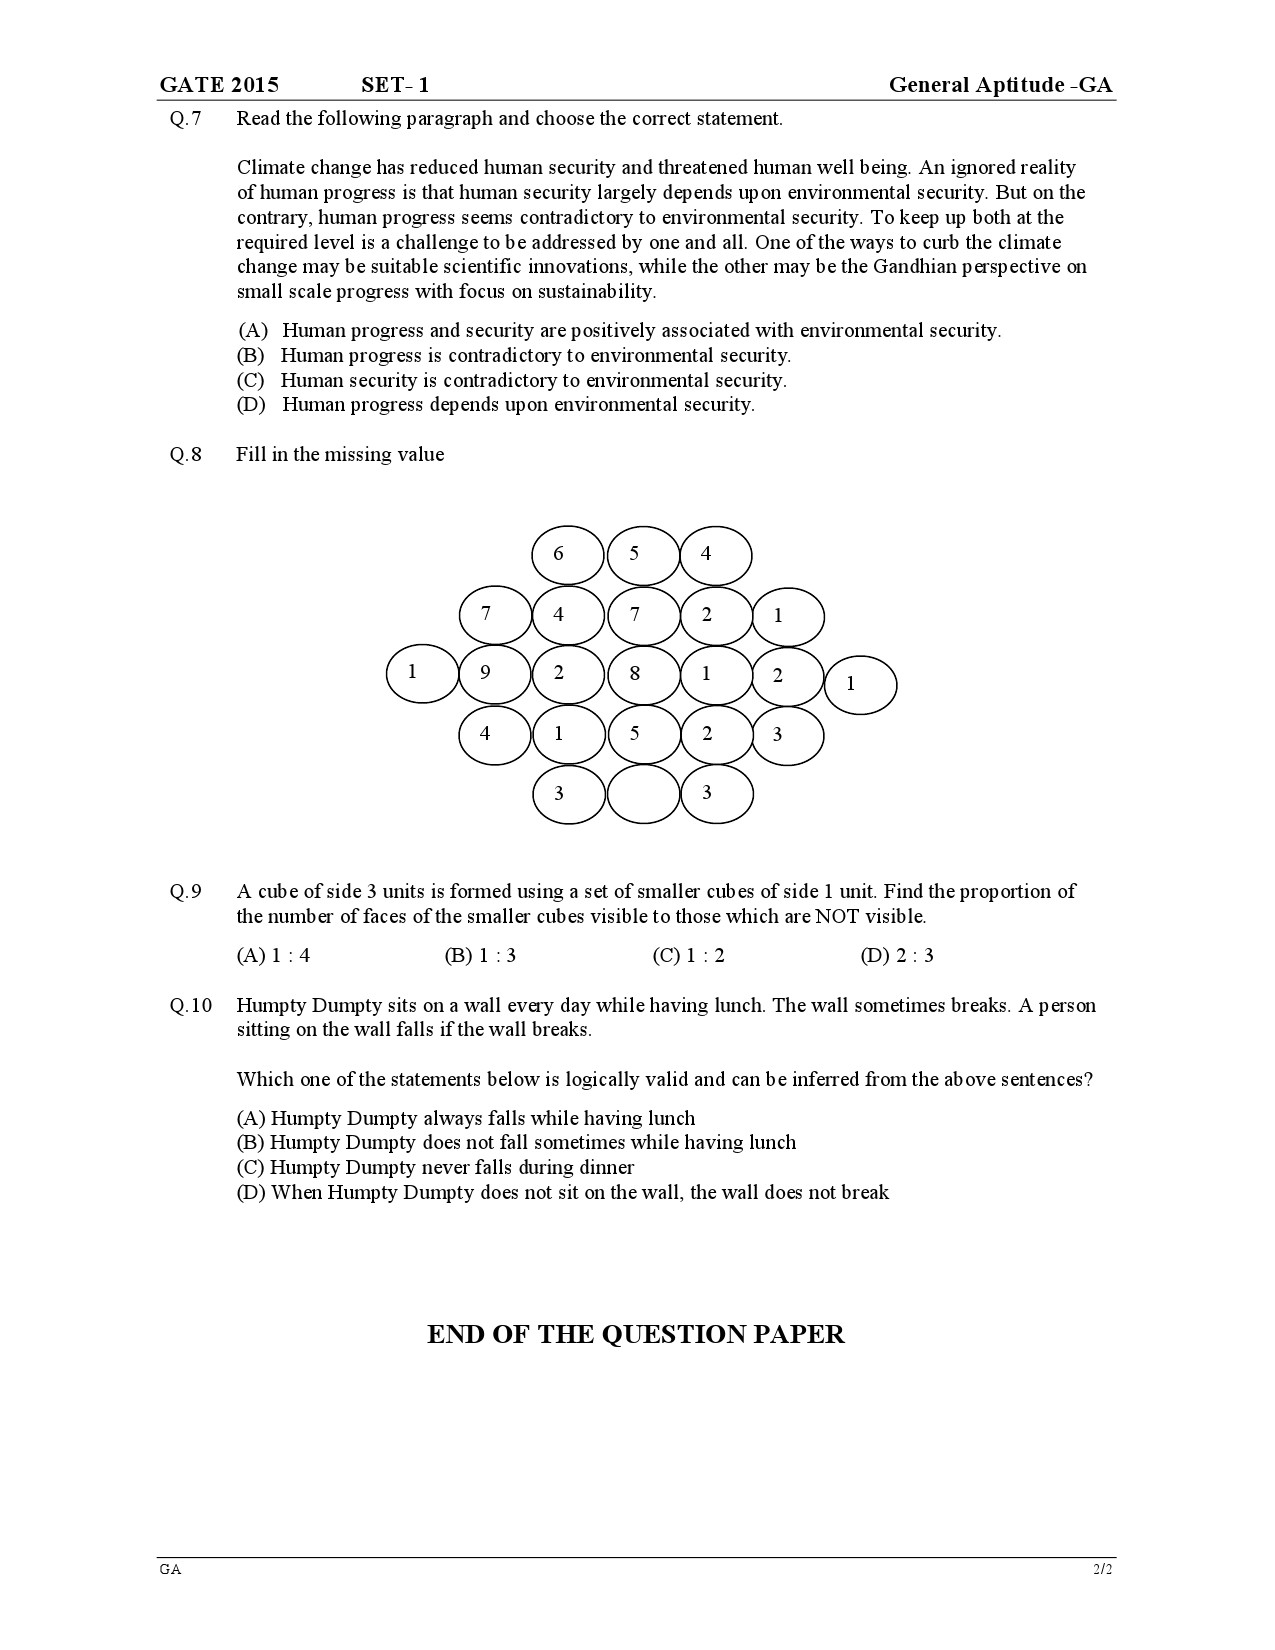 GATE Exam Question Paper 2015 General Aptitude 2